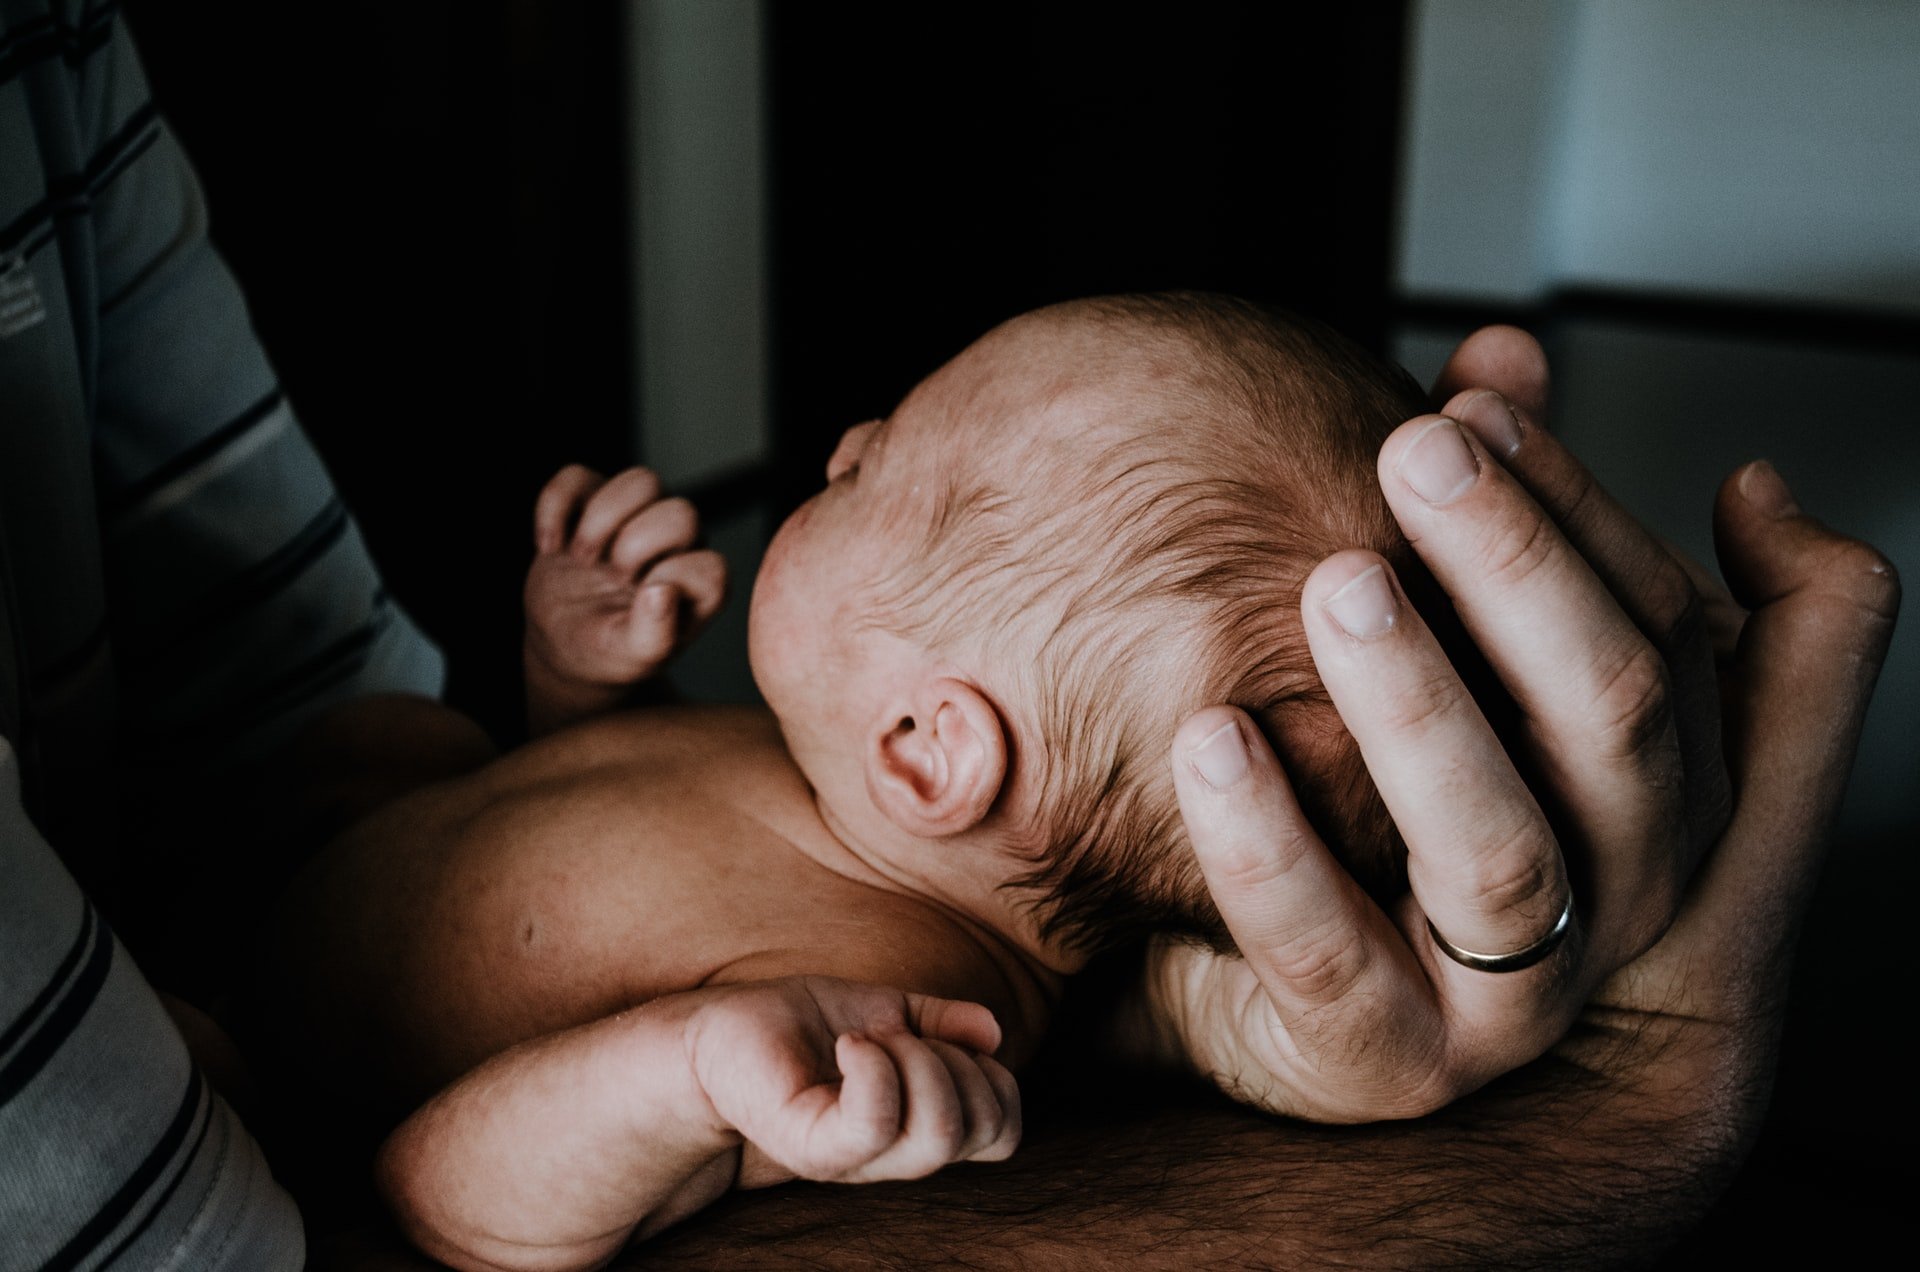 A person holding a newborn baby. | Source: Unsplash